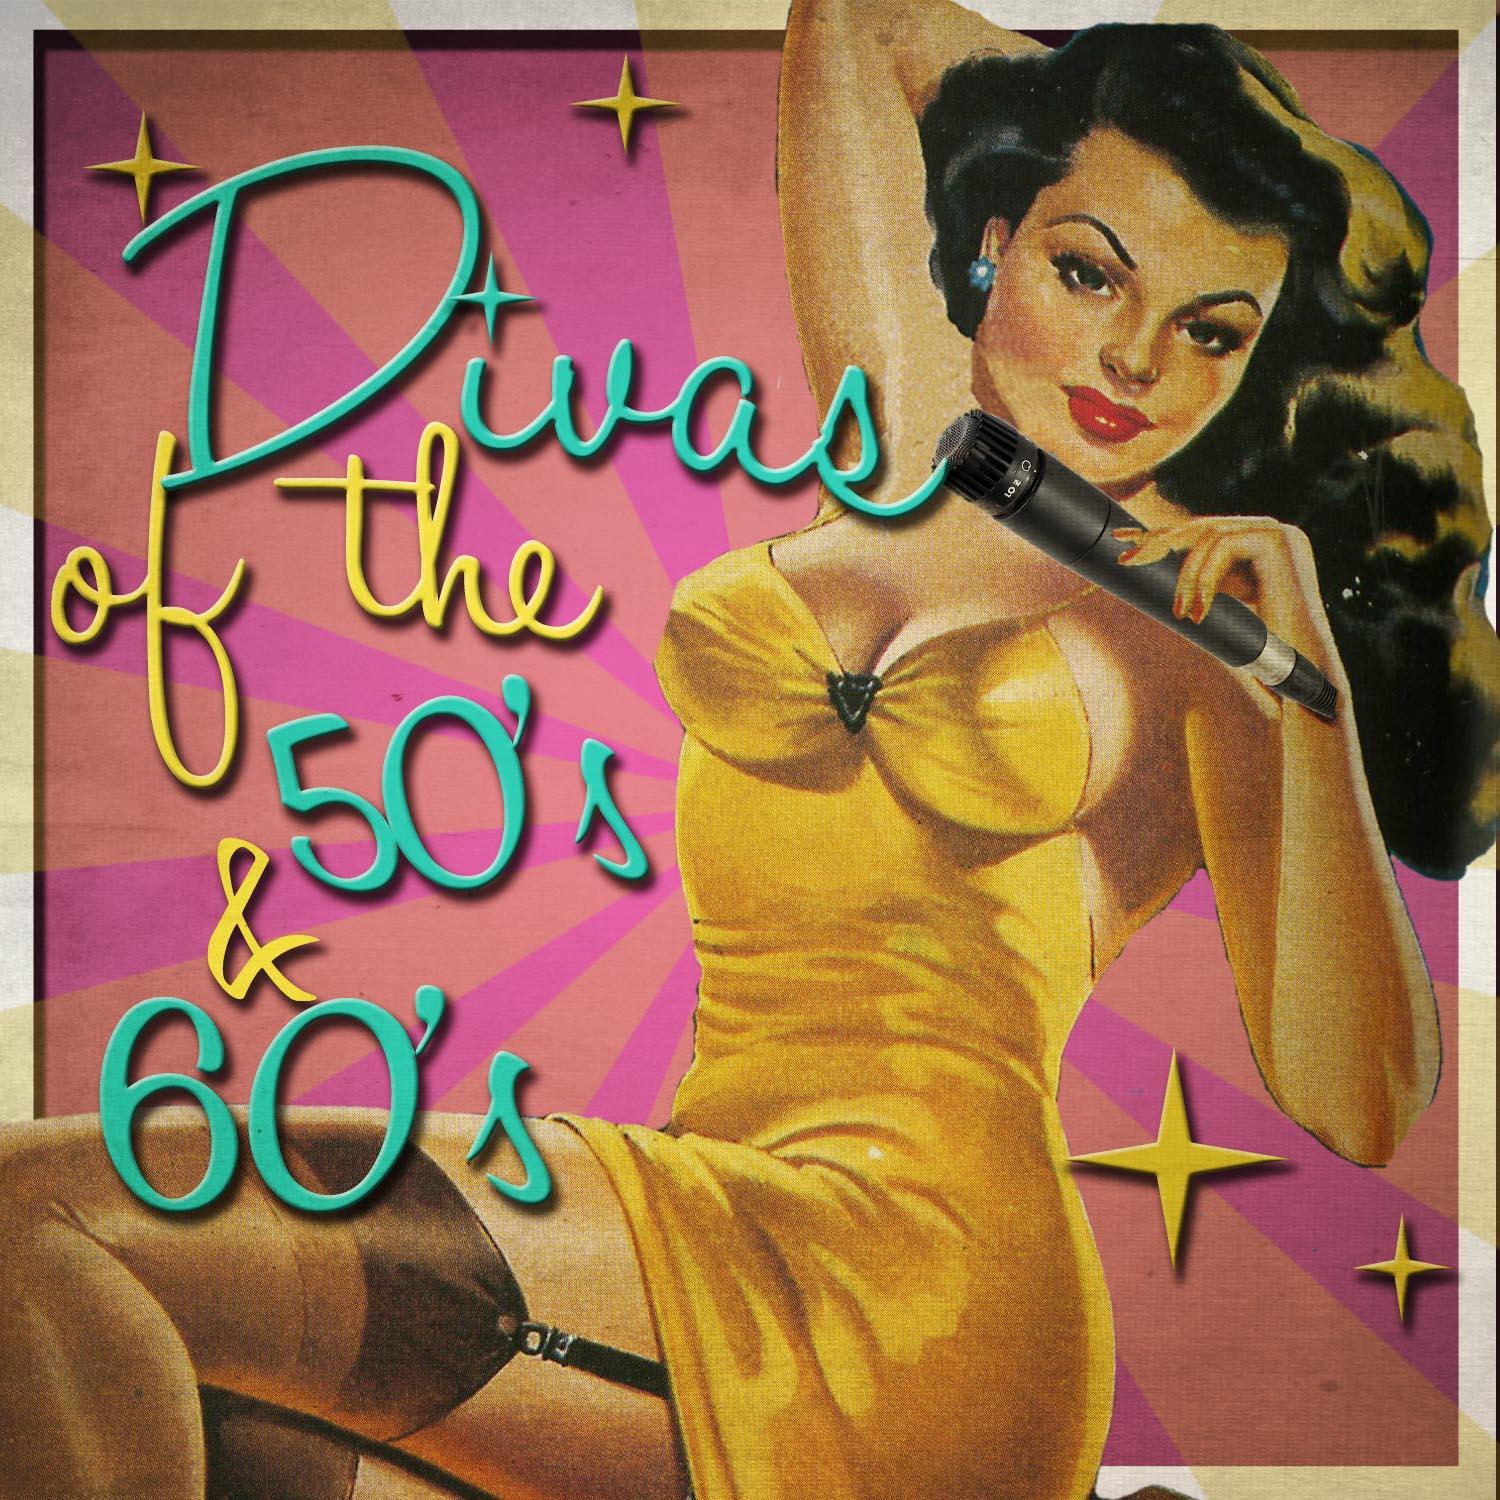 Divas of the 50's & 60's